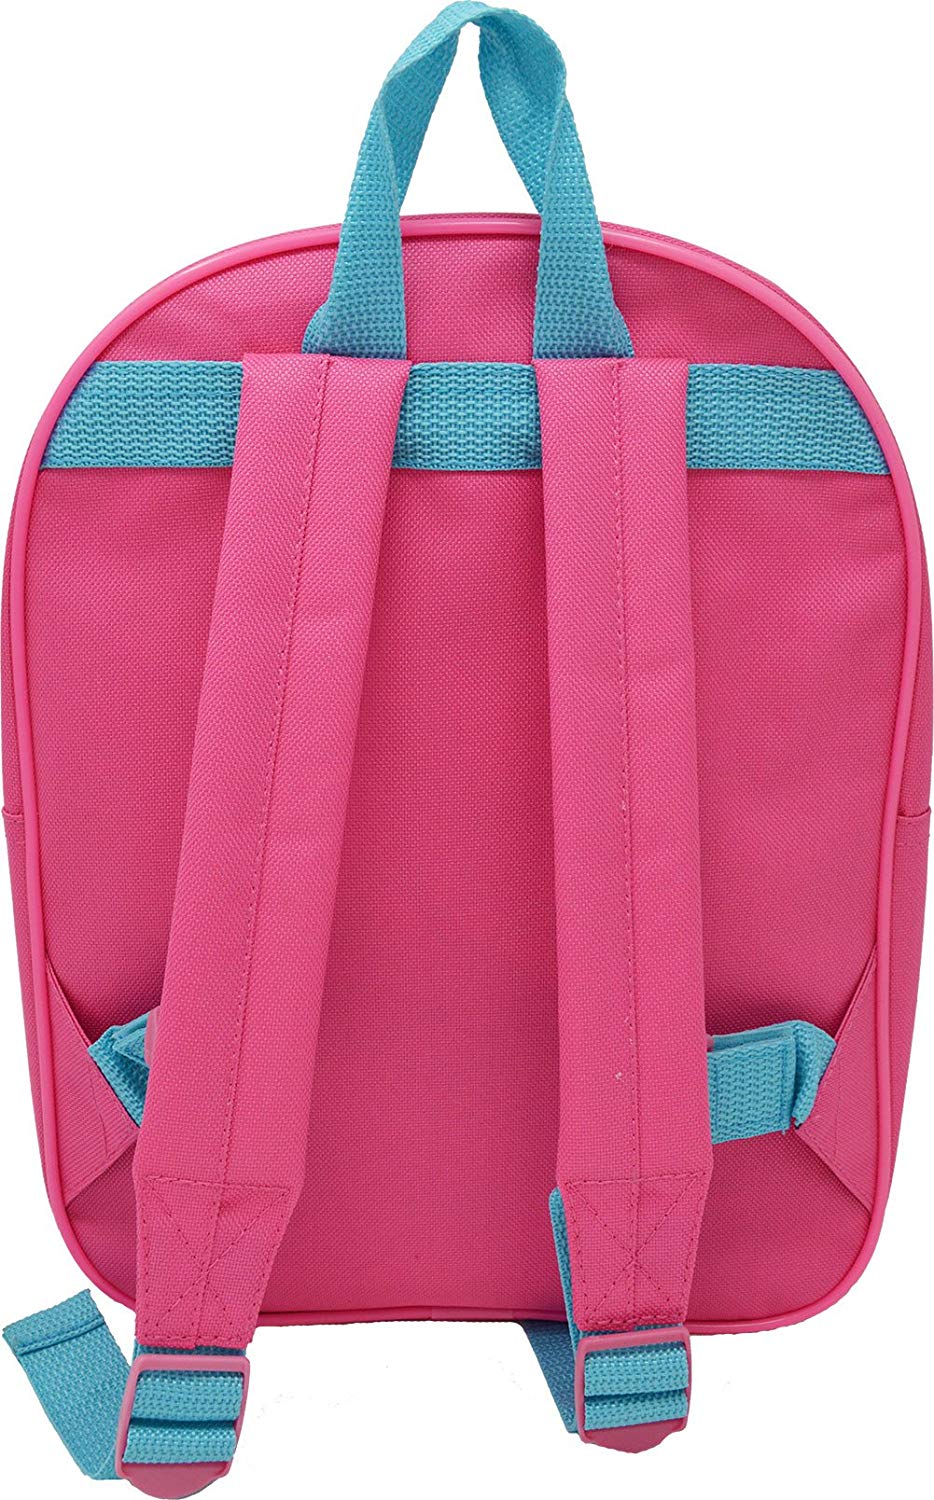 Disney Trolls Girls School Bag Rucksack Backpack